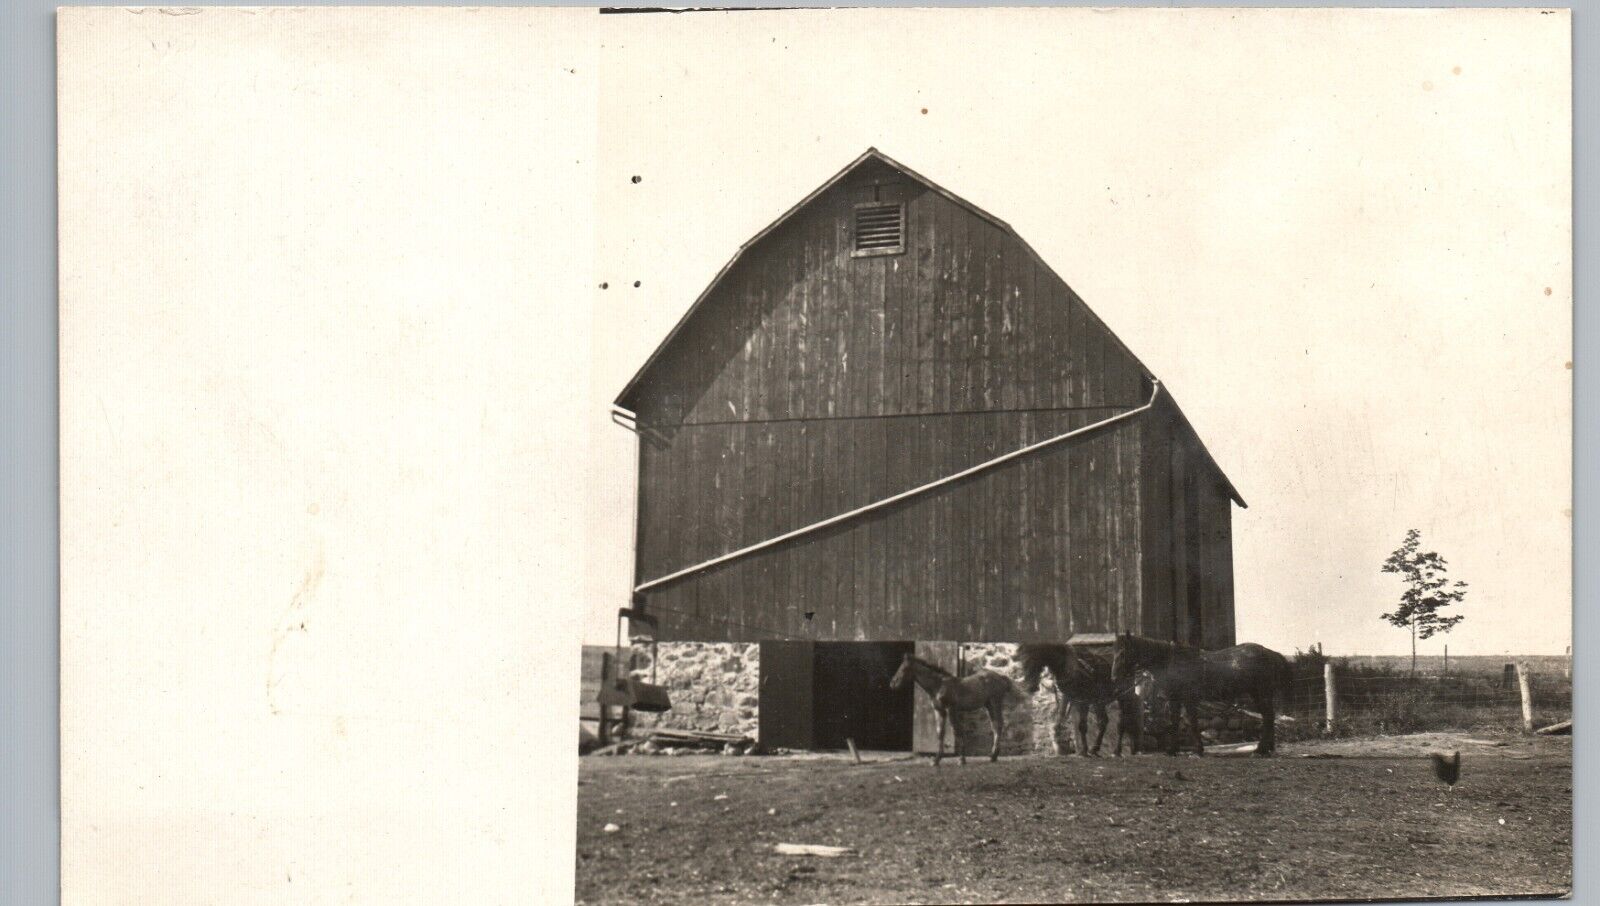 HORSES & BARN c1910 woodville wi real photo postcard rppc wisconsin farm history